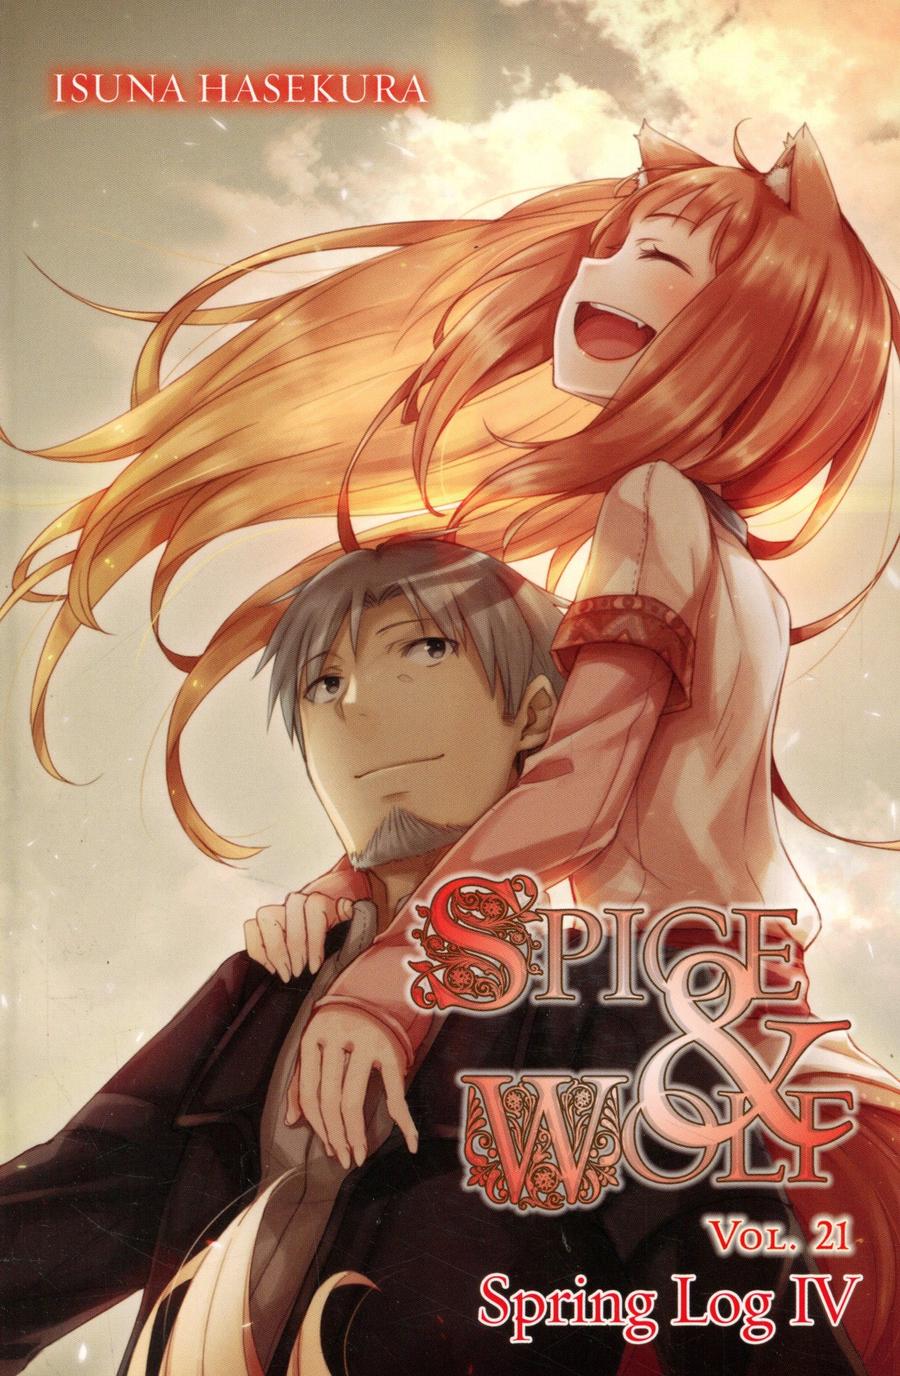 Spice & Wolf Novel Vol 21 Spring Log IV